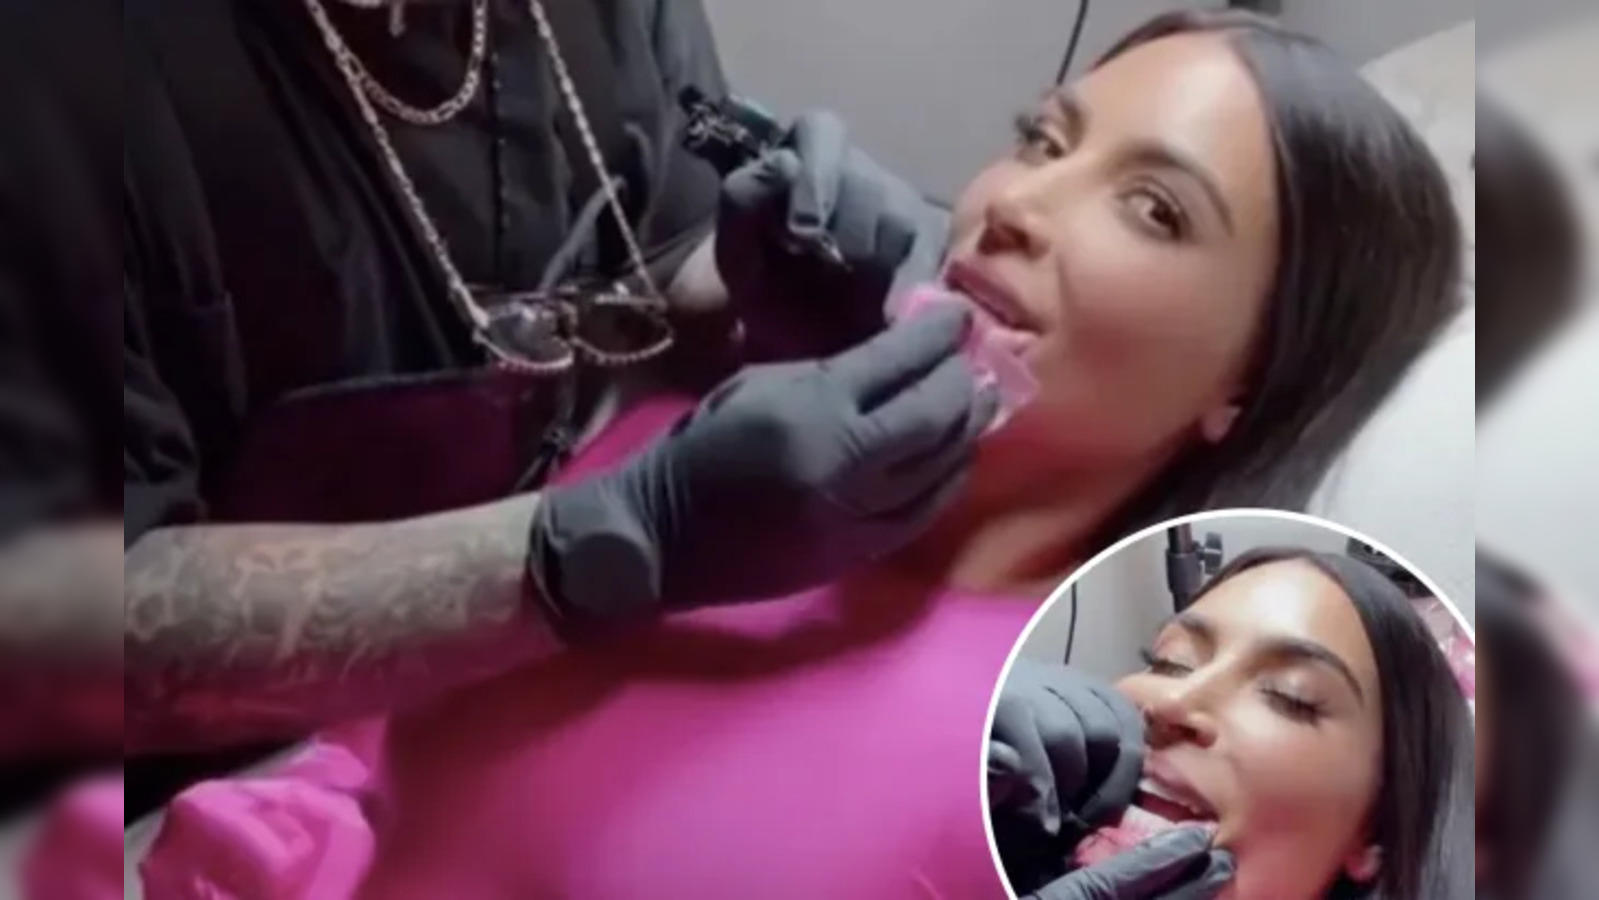 Kim Kardashian inks her first tattoo